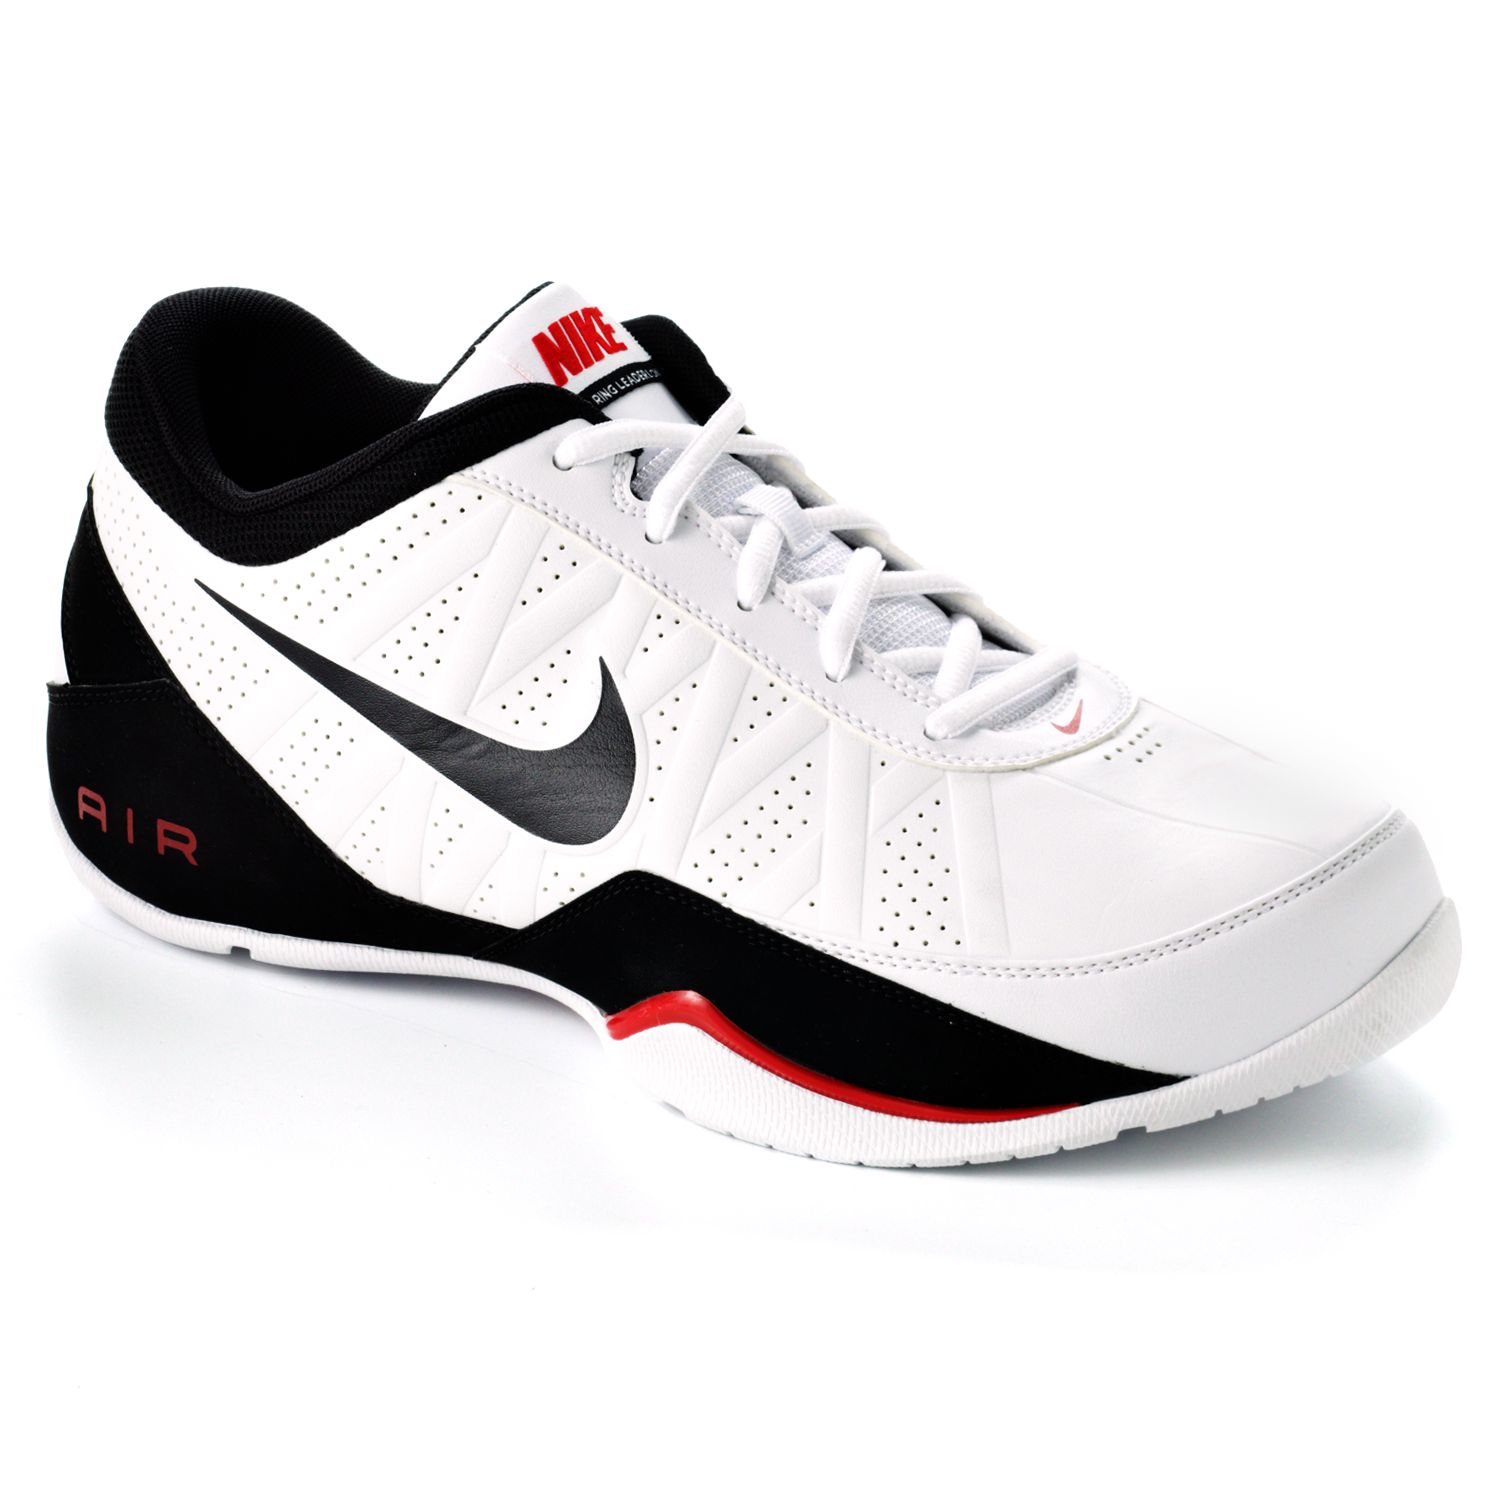 Nike Air Ring Leader Men's Basketball Shoes